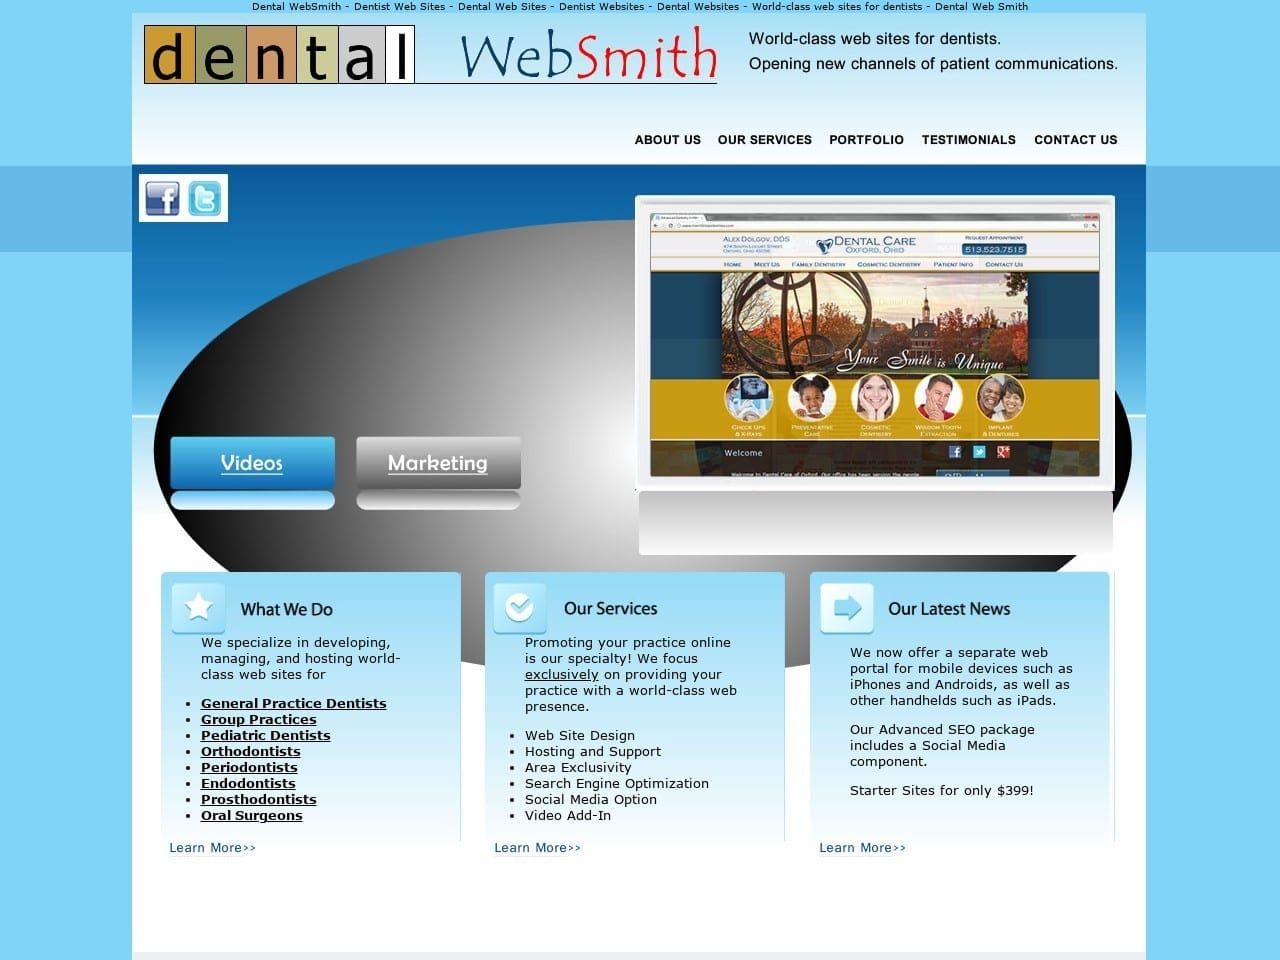 Dental WebSmith Inc. Website Screenshot from dentalwebsmith.com